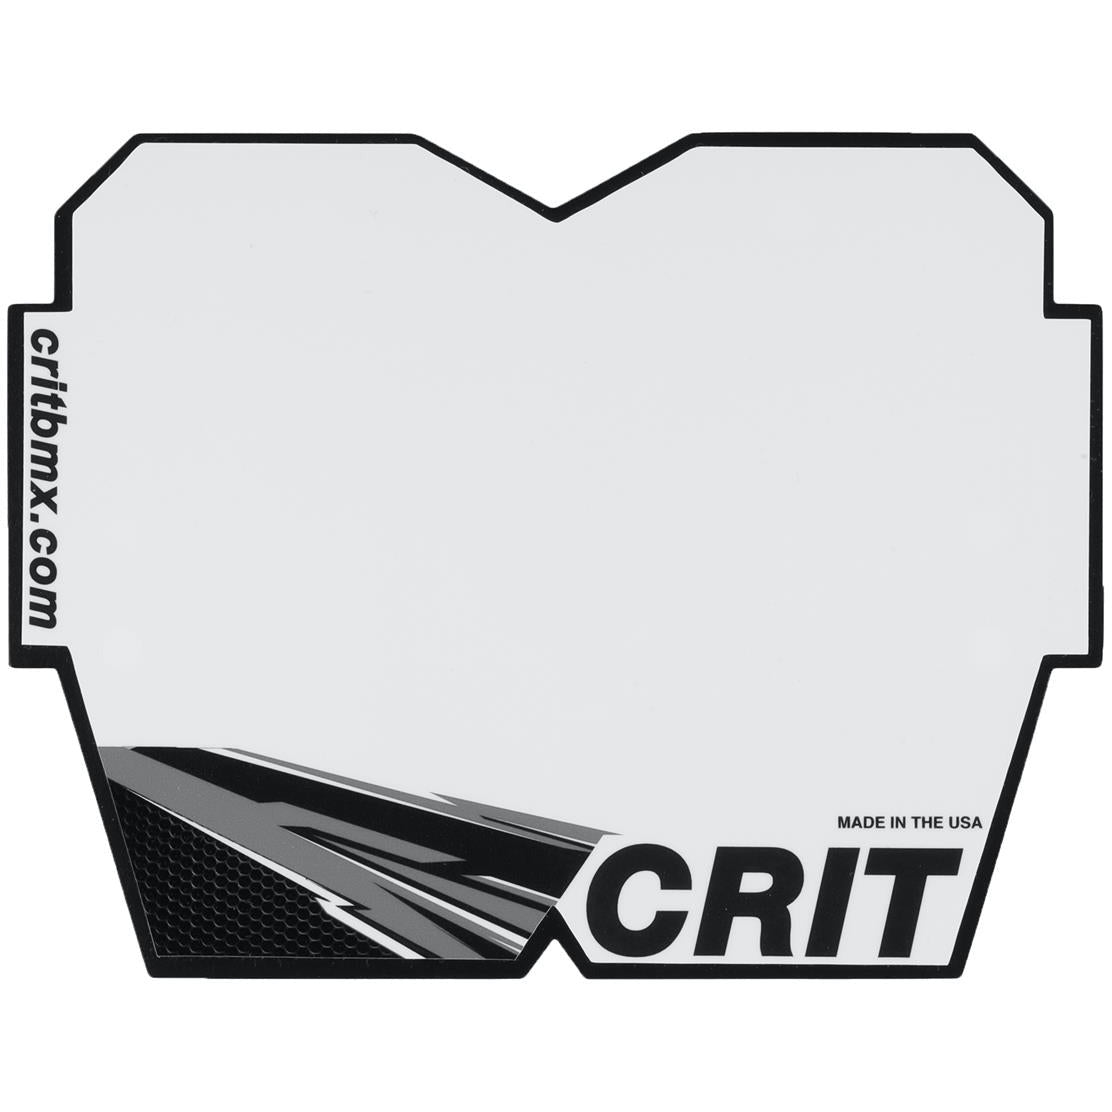 Crit Carbon Number Plate